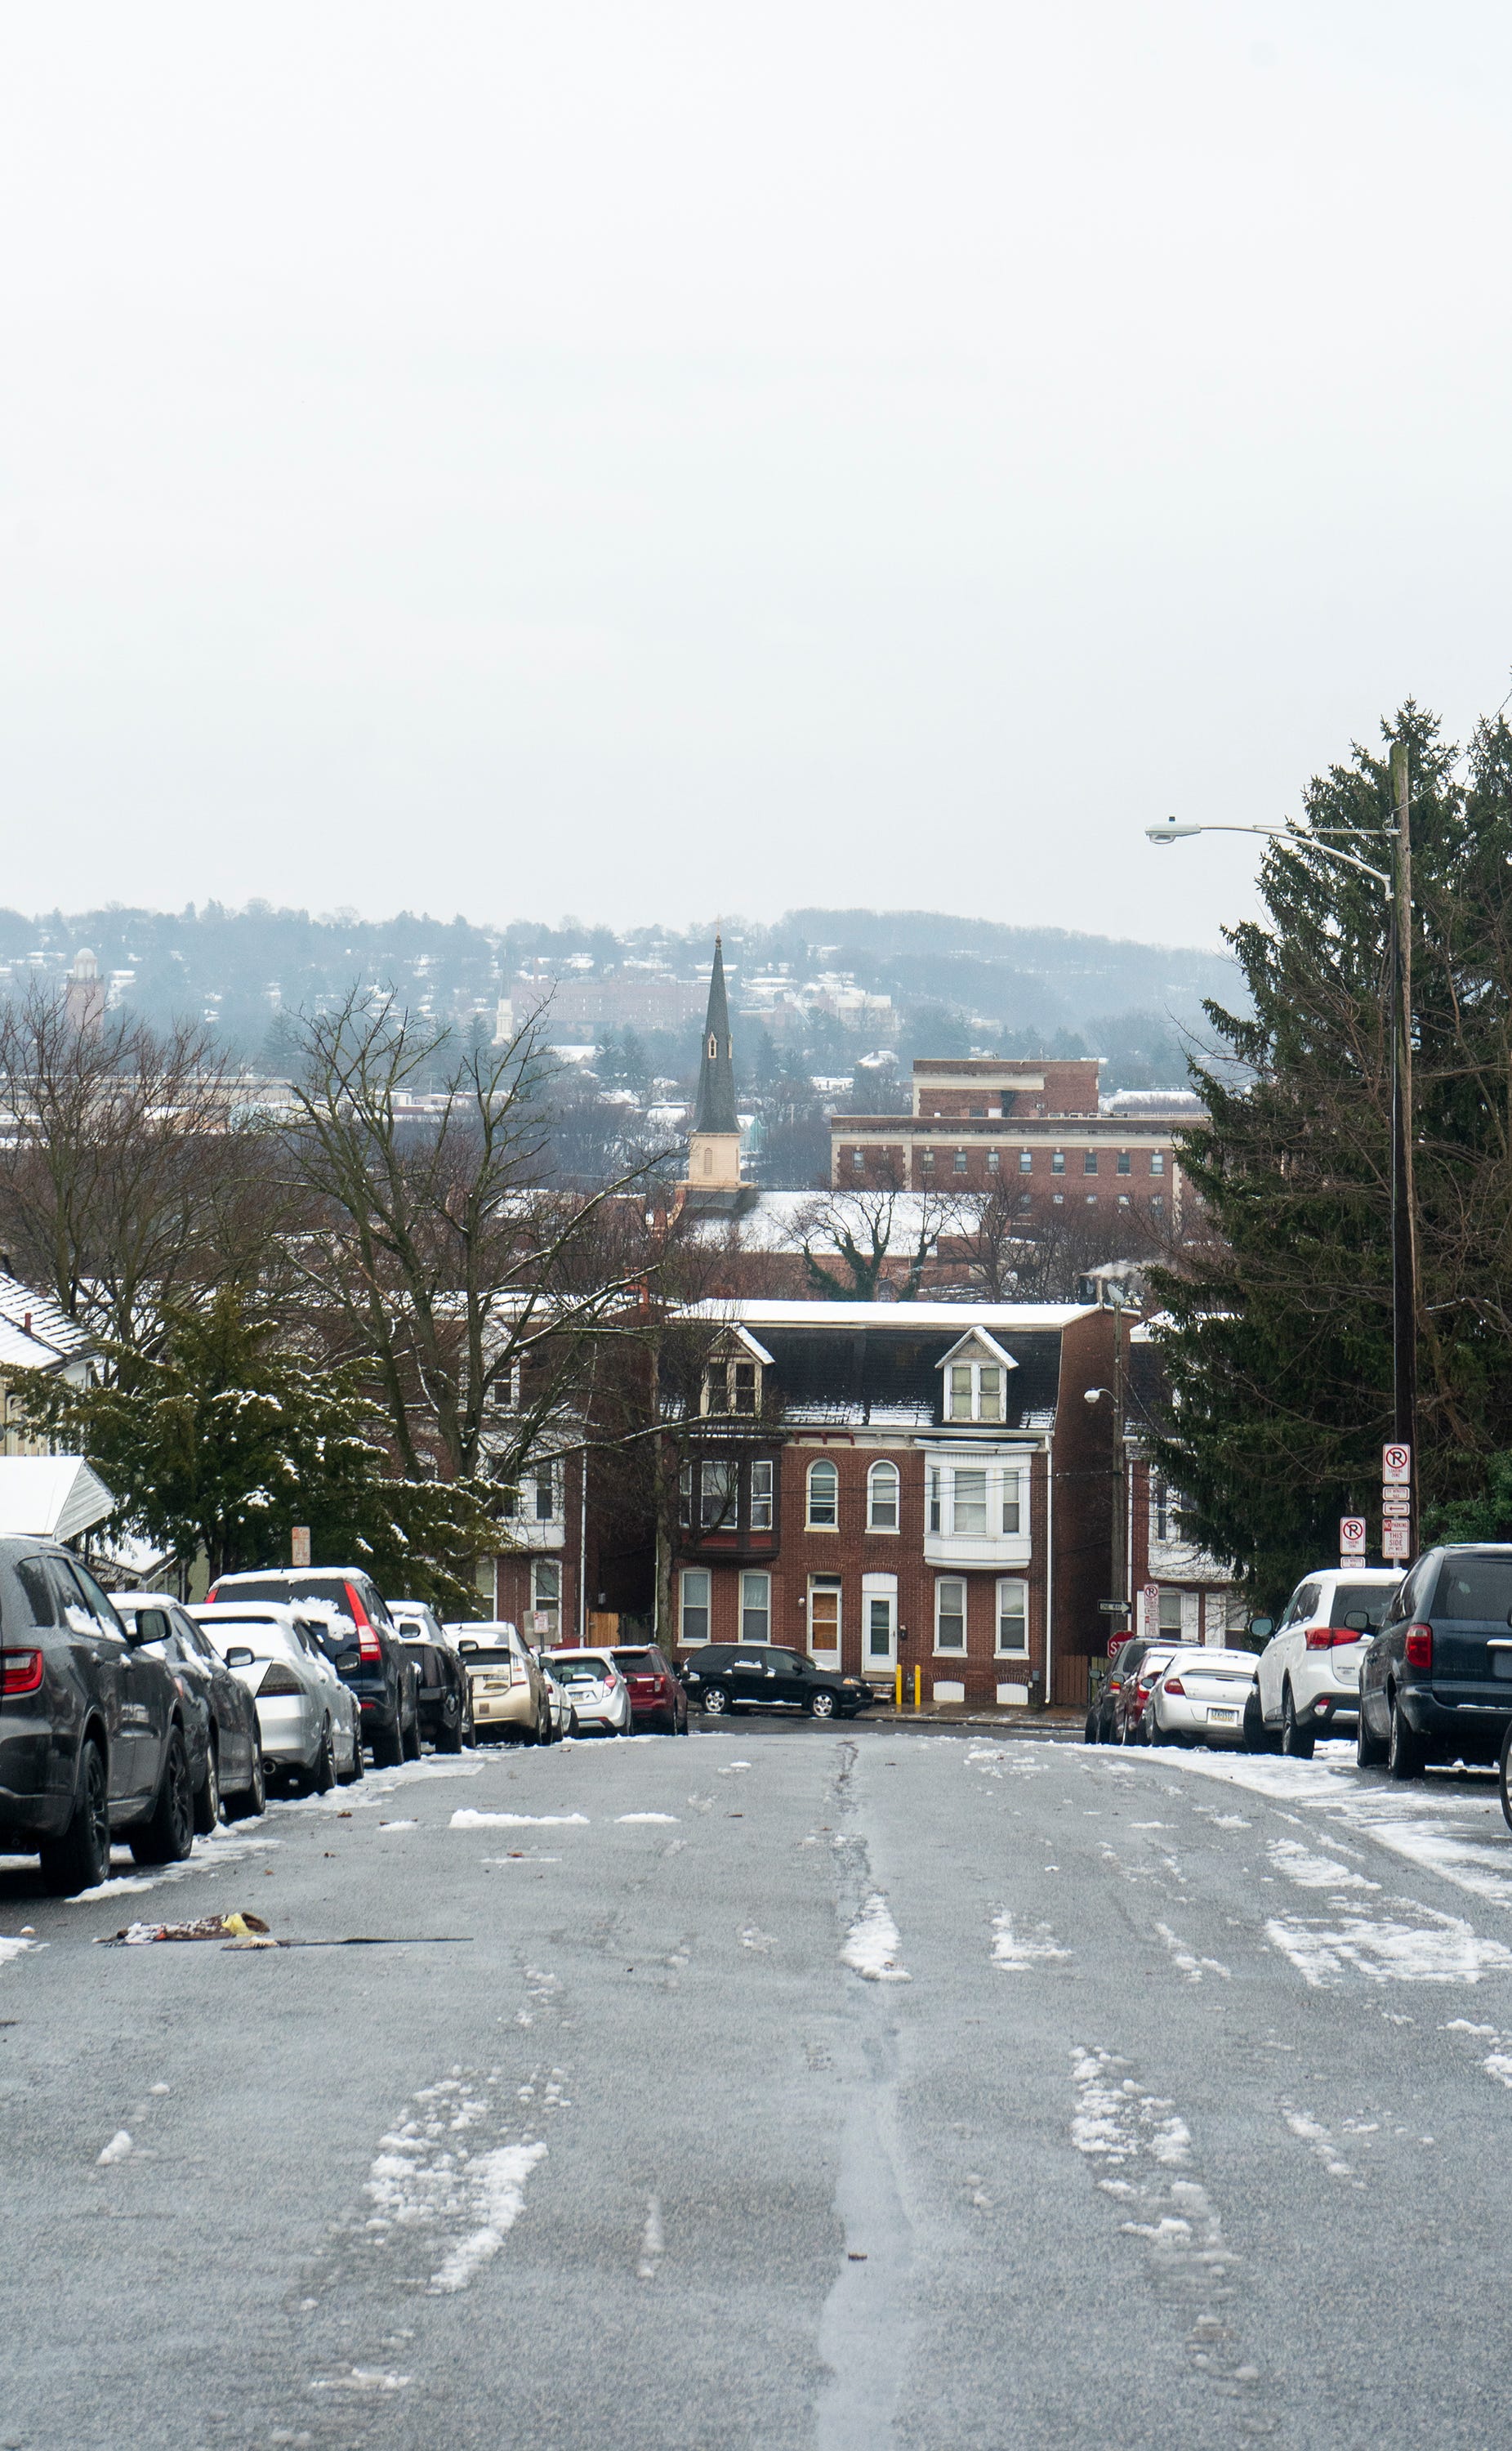 Snow turned to slush on Garfield St. in York on Wednesday, Jan. 25, 2023.